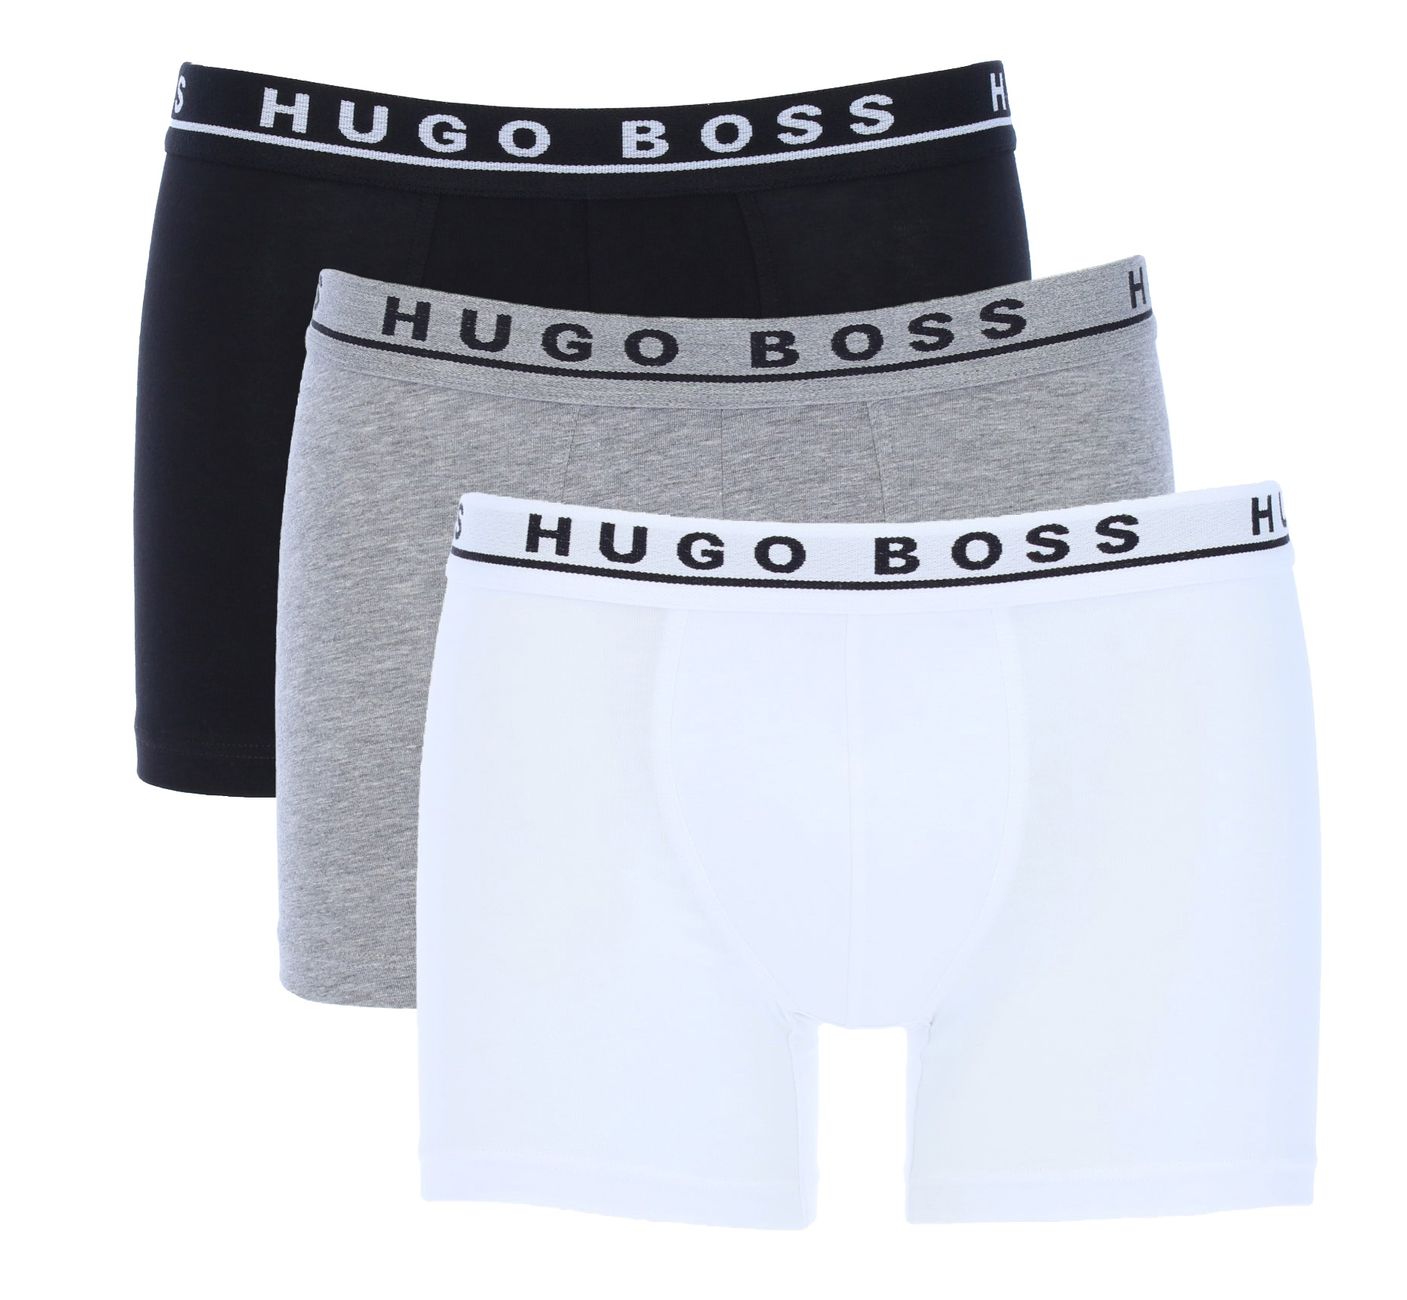 Hugo Boss Herren Boxershorts 3er Pack Boxer Brief - Hugo Boss - SAGATOO - 4021419122837